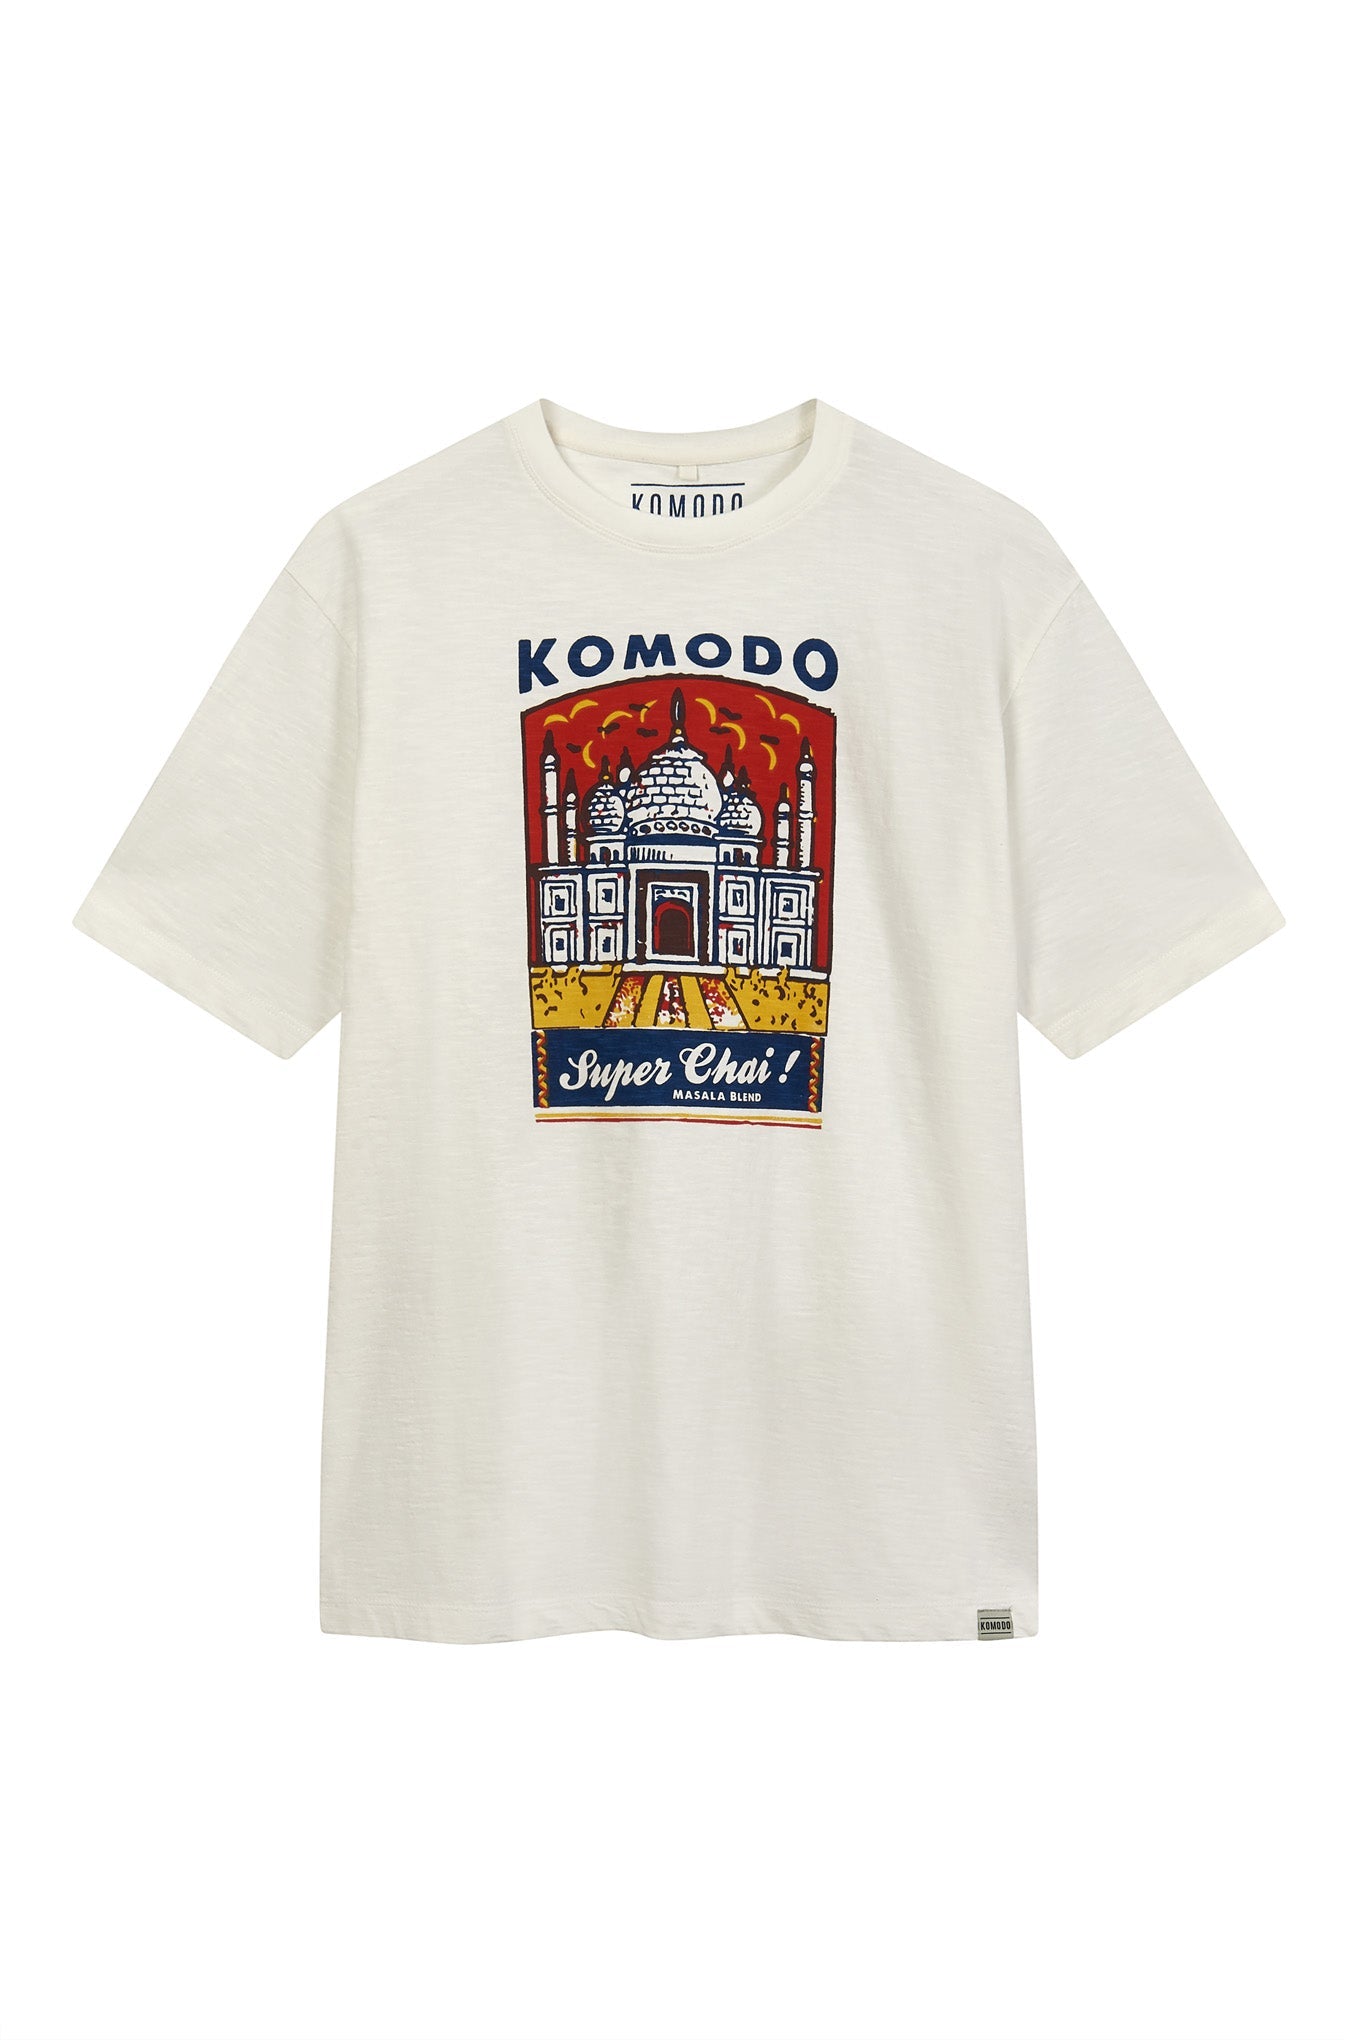 White T-shirt SUPER CHAI made of organic cotton from Komodo